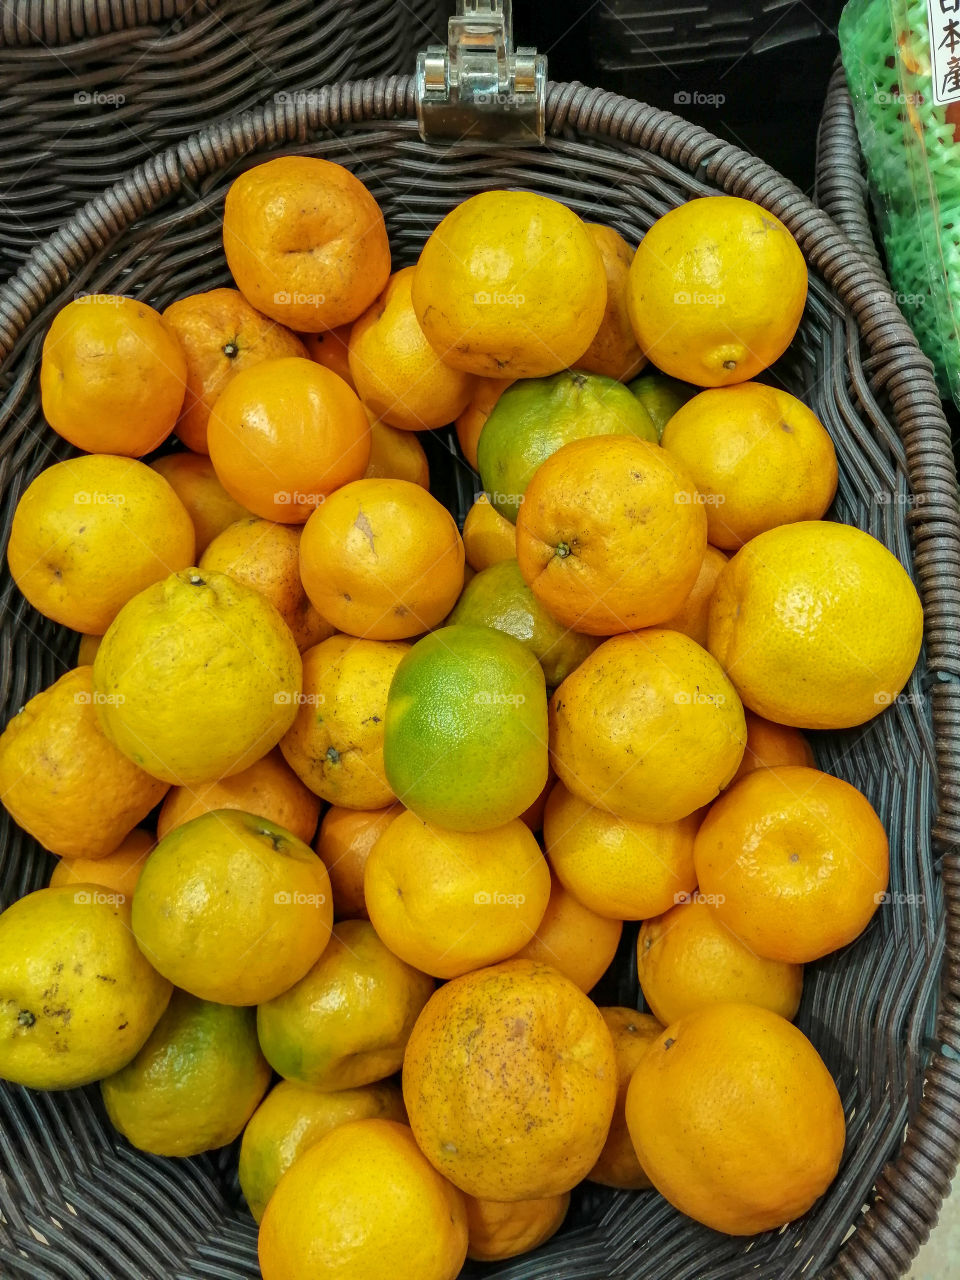 Mandarins in a basket for sale